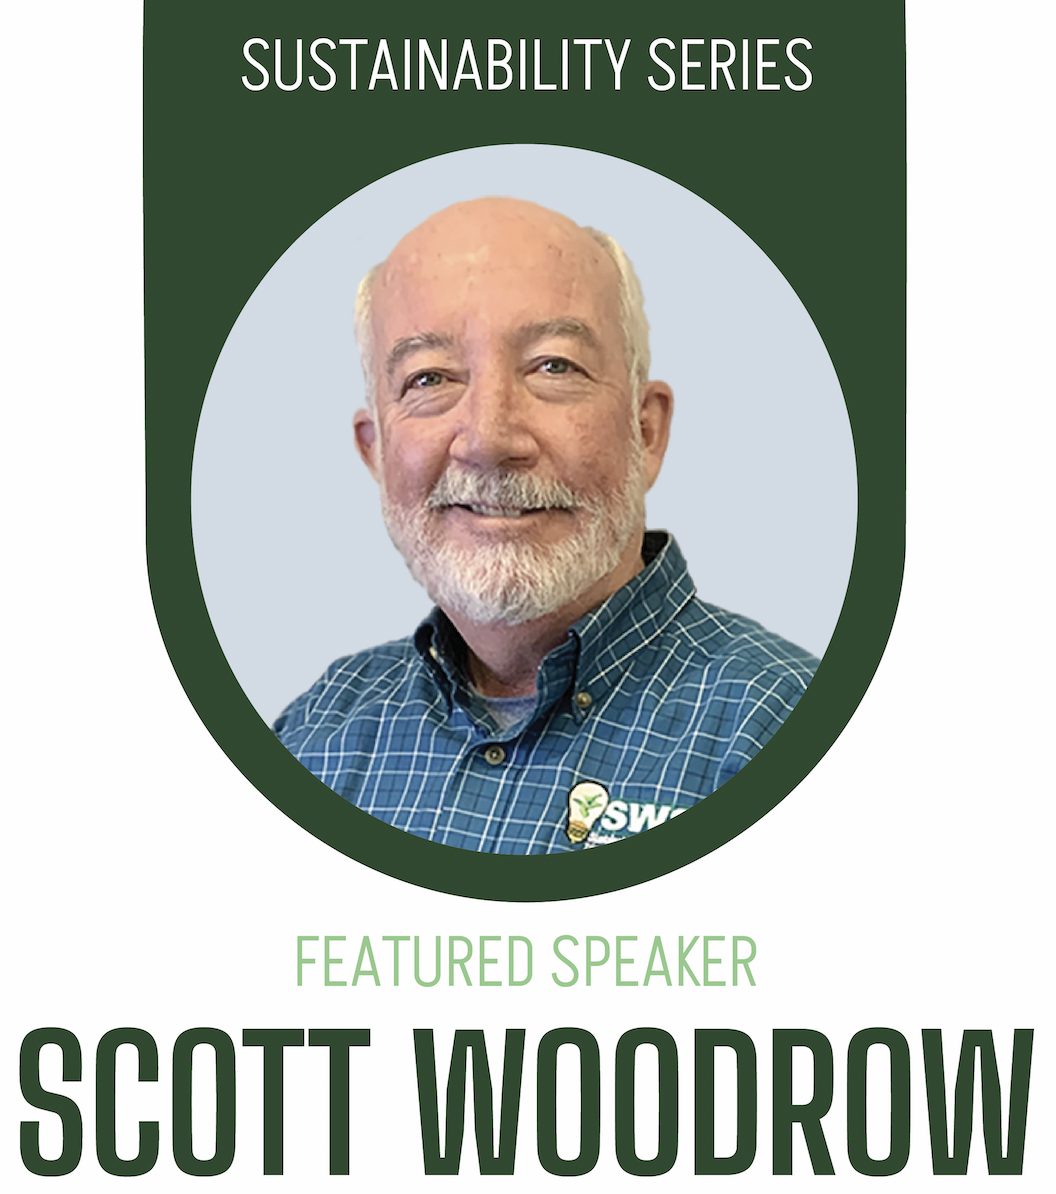 Image of Scott Woodrow - Sustainability Series Featured Speaker